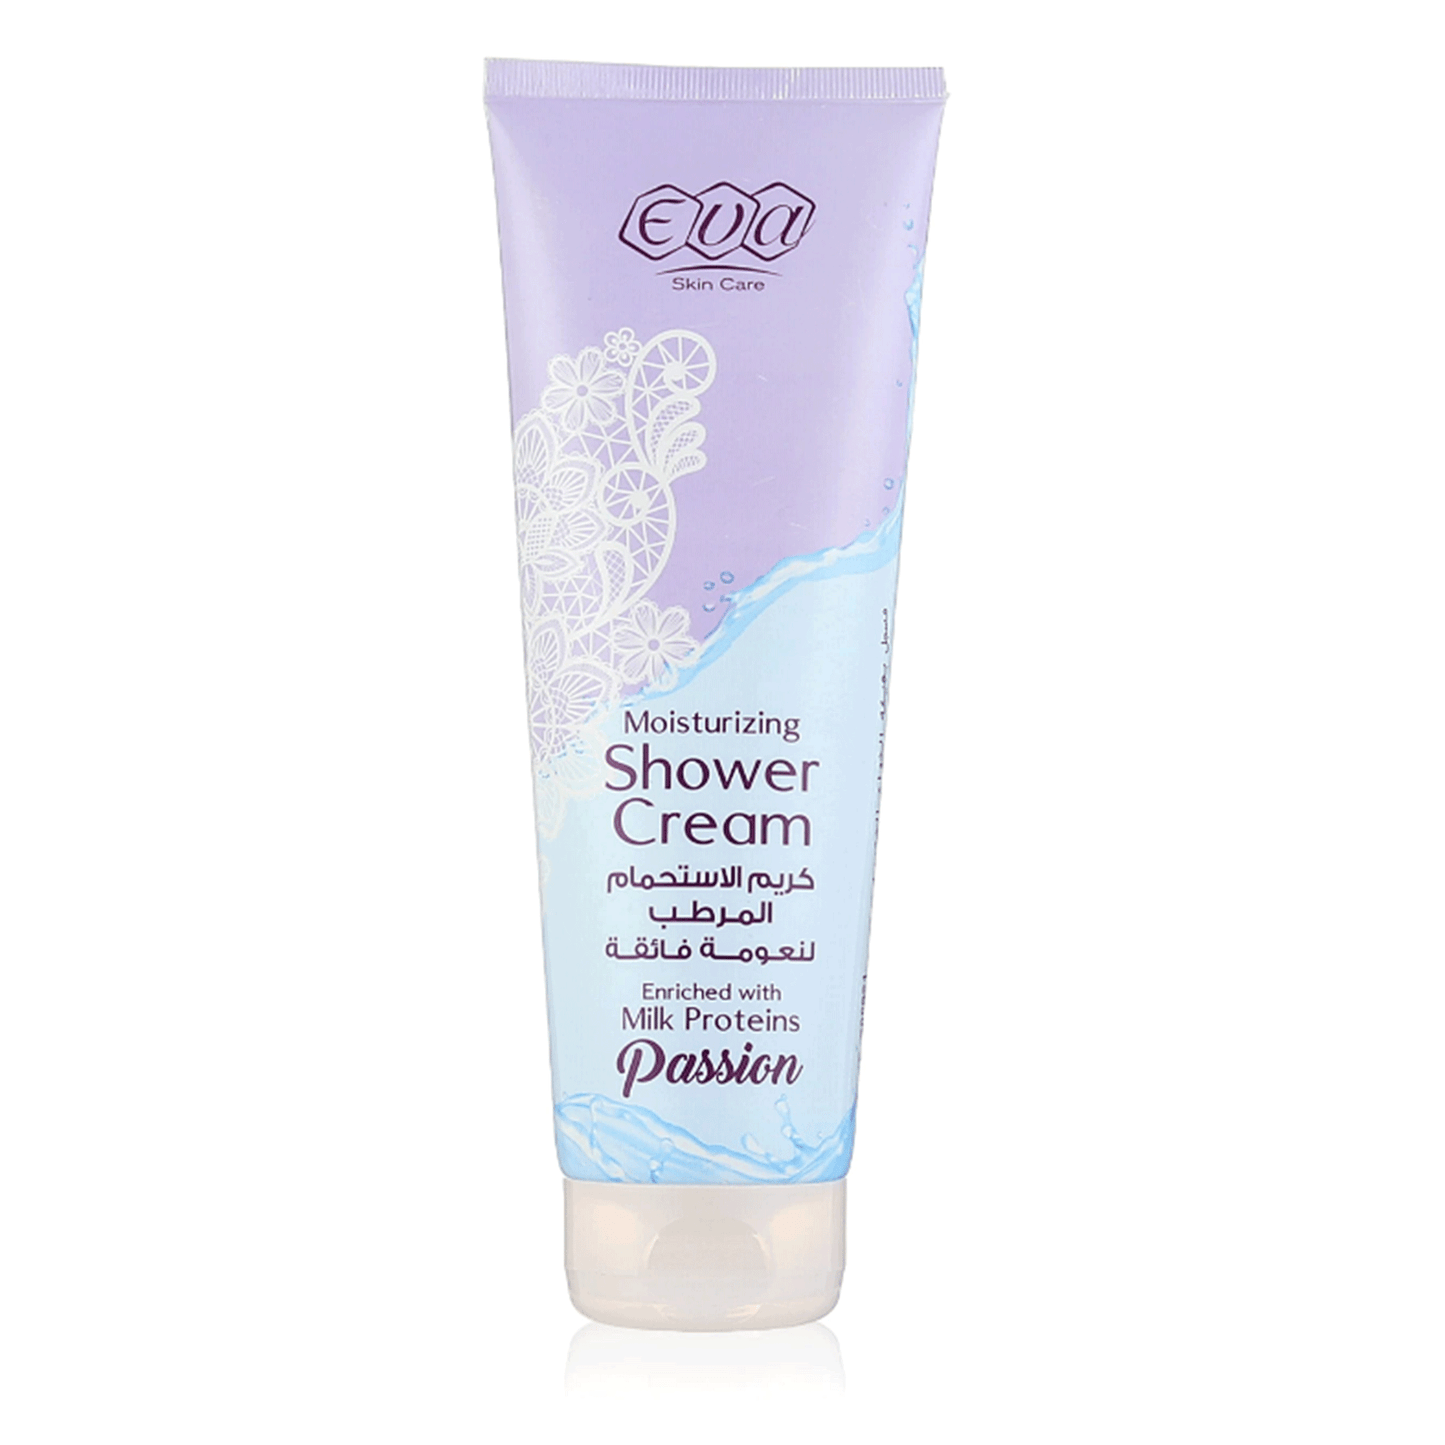 Eva Skin Care passion Shower Cream + loofa